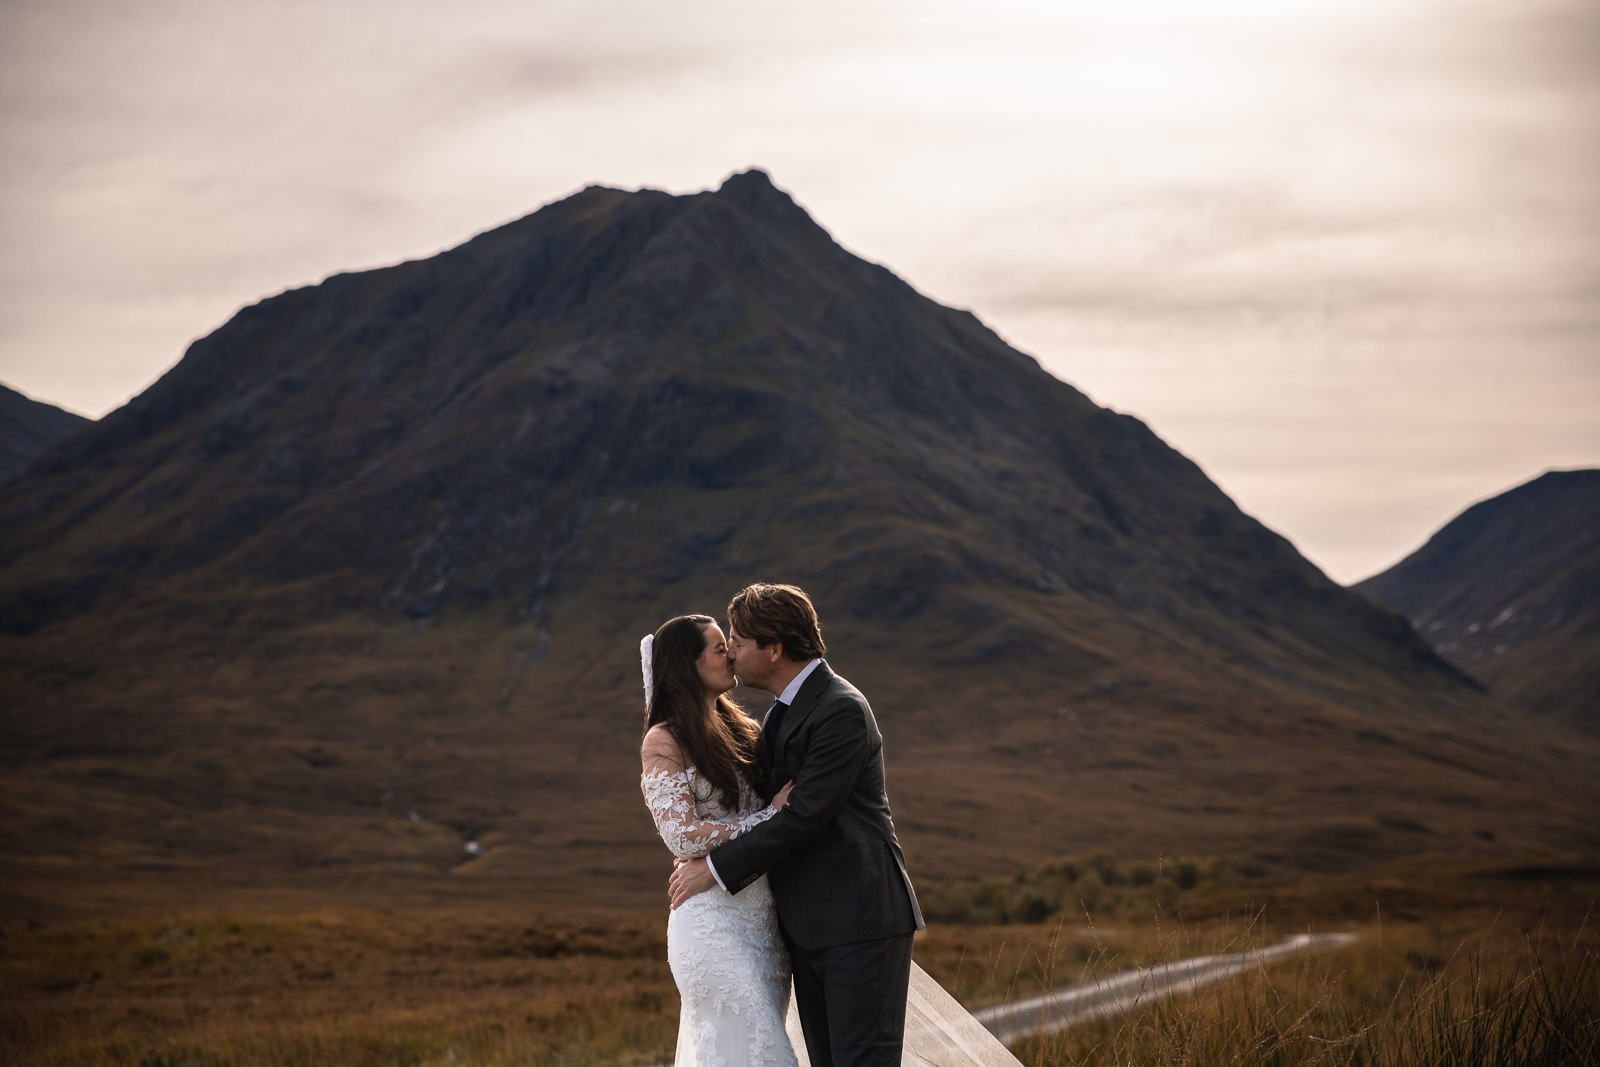 Wedding photographer Highlands Scotland Glencoe Mountain Couple kiss